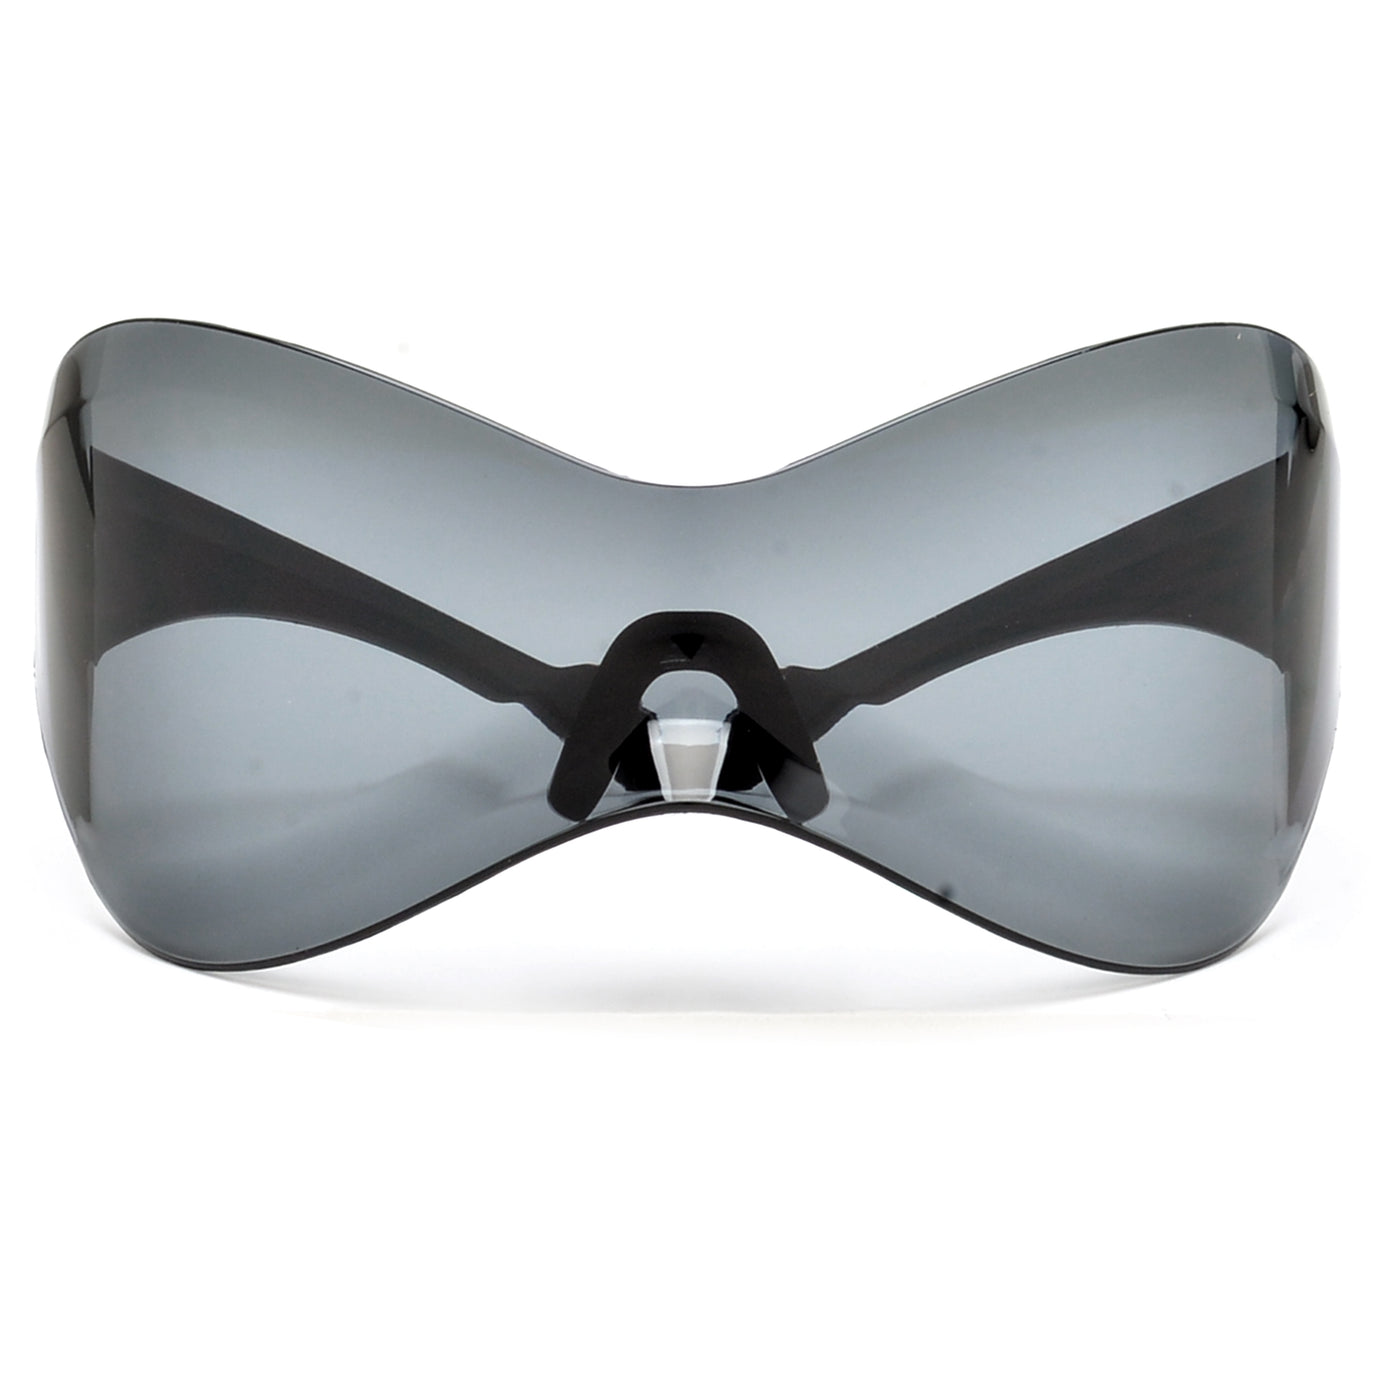 Omi Sharp Rimless Bottom Modernized Cat-Eye Frame-High Fashion Desig – Red  Frame Accessories